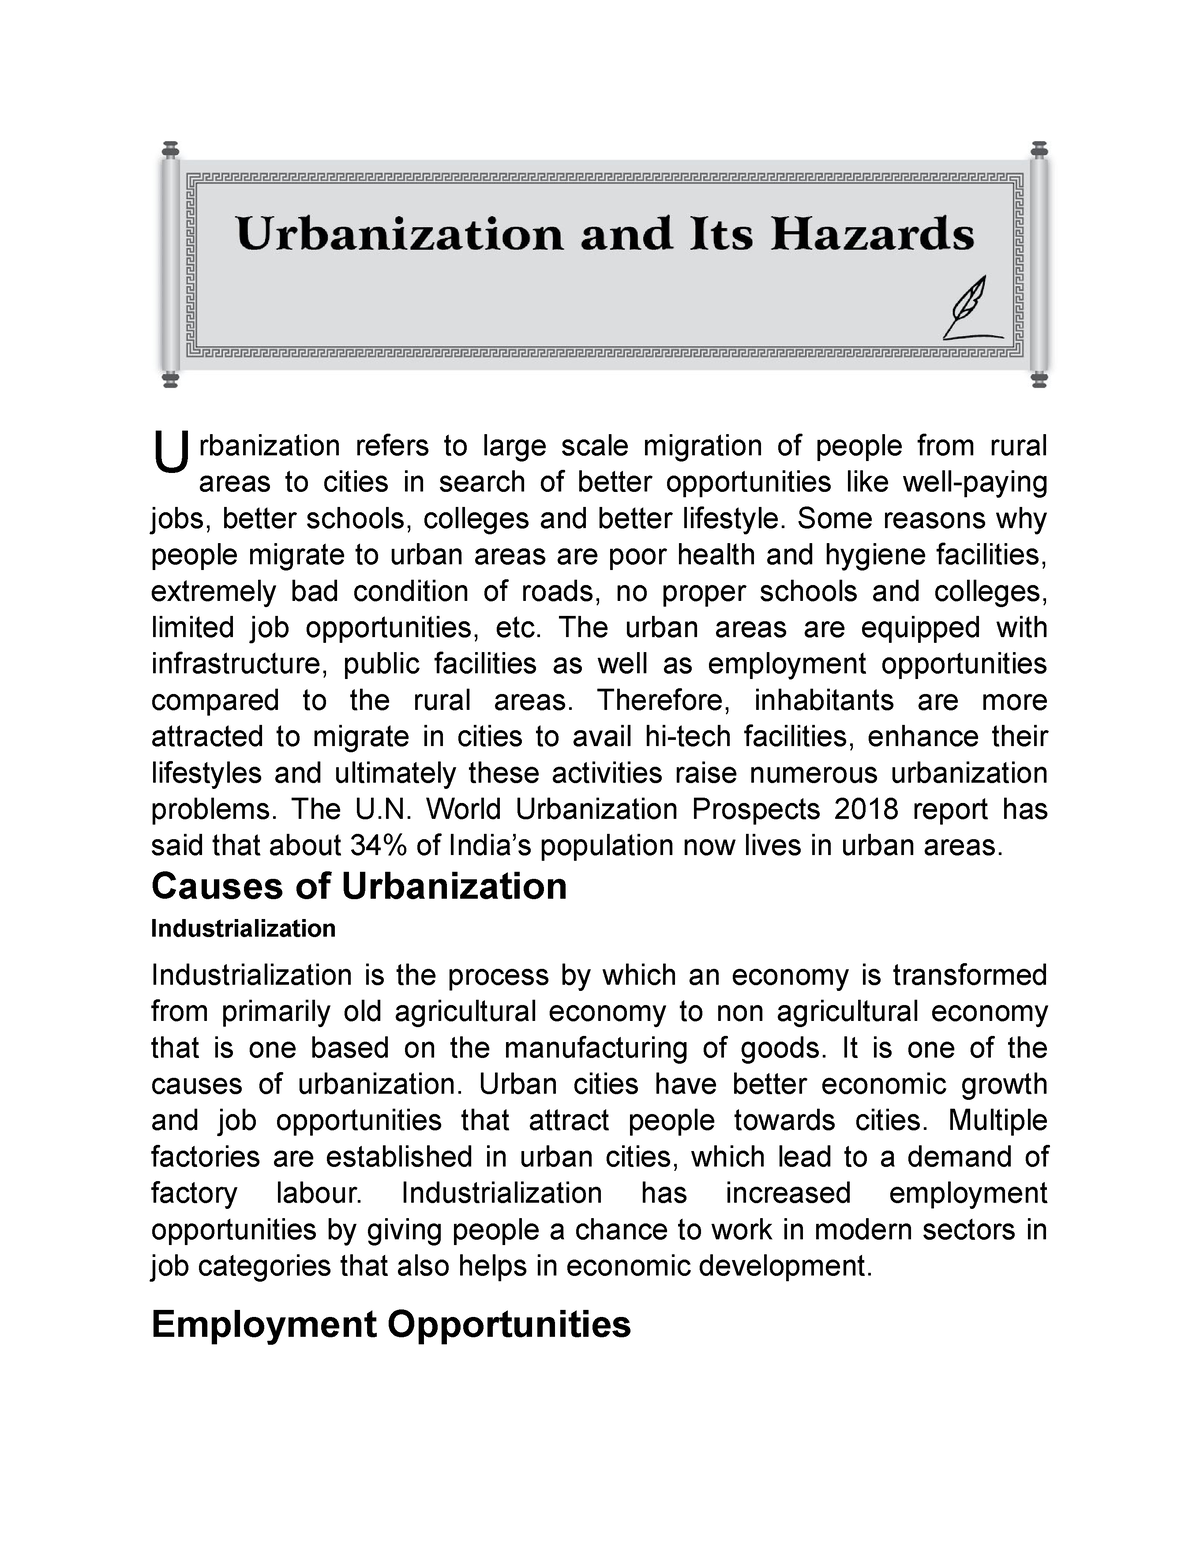 essay urbanization and its hazards